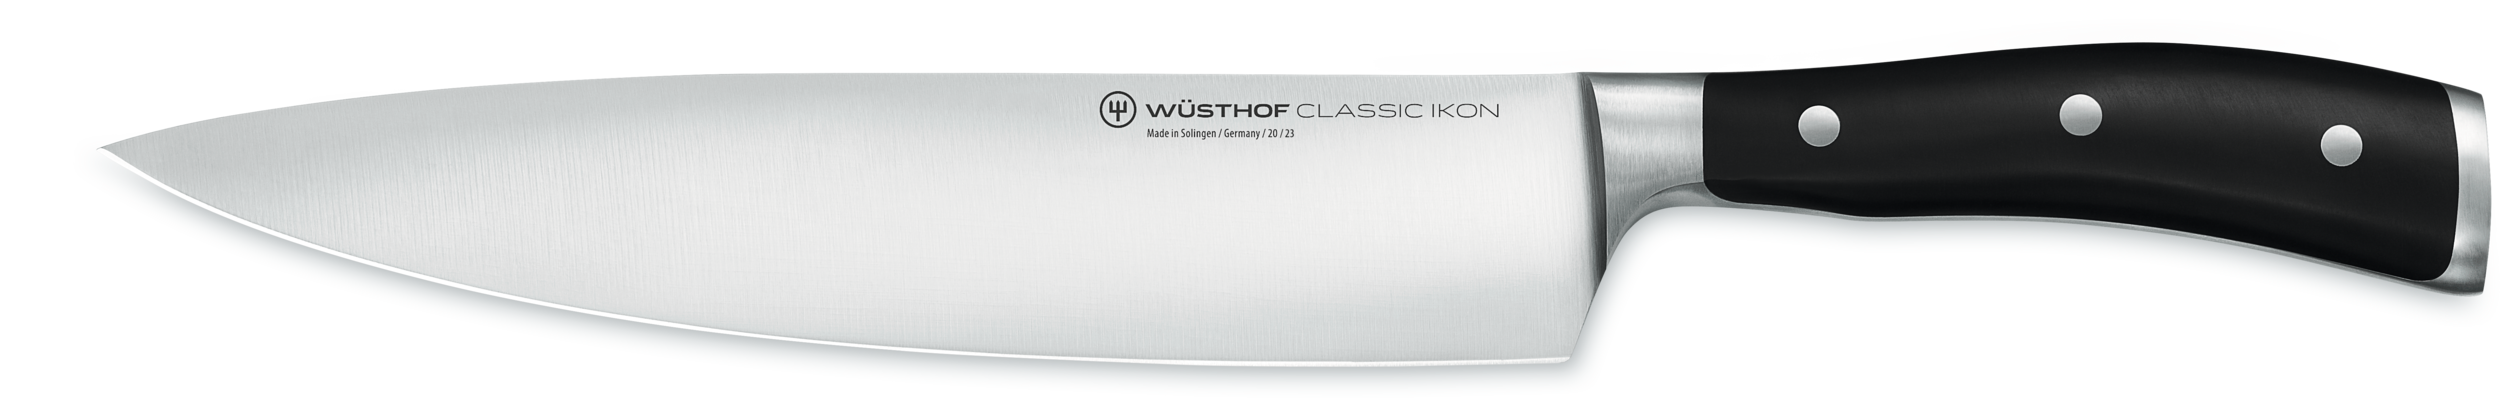 Wusthof Classic Ikon Black Chef's Knife 23cm 1040330123